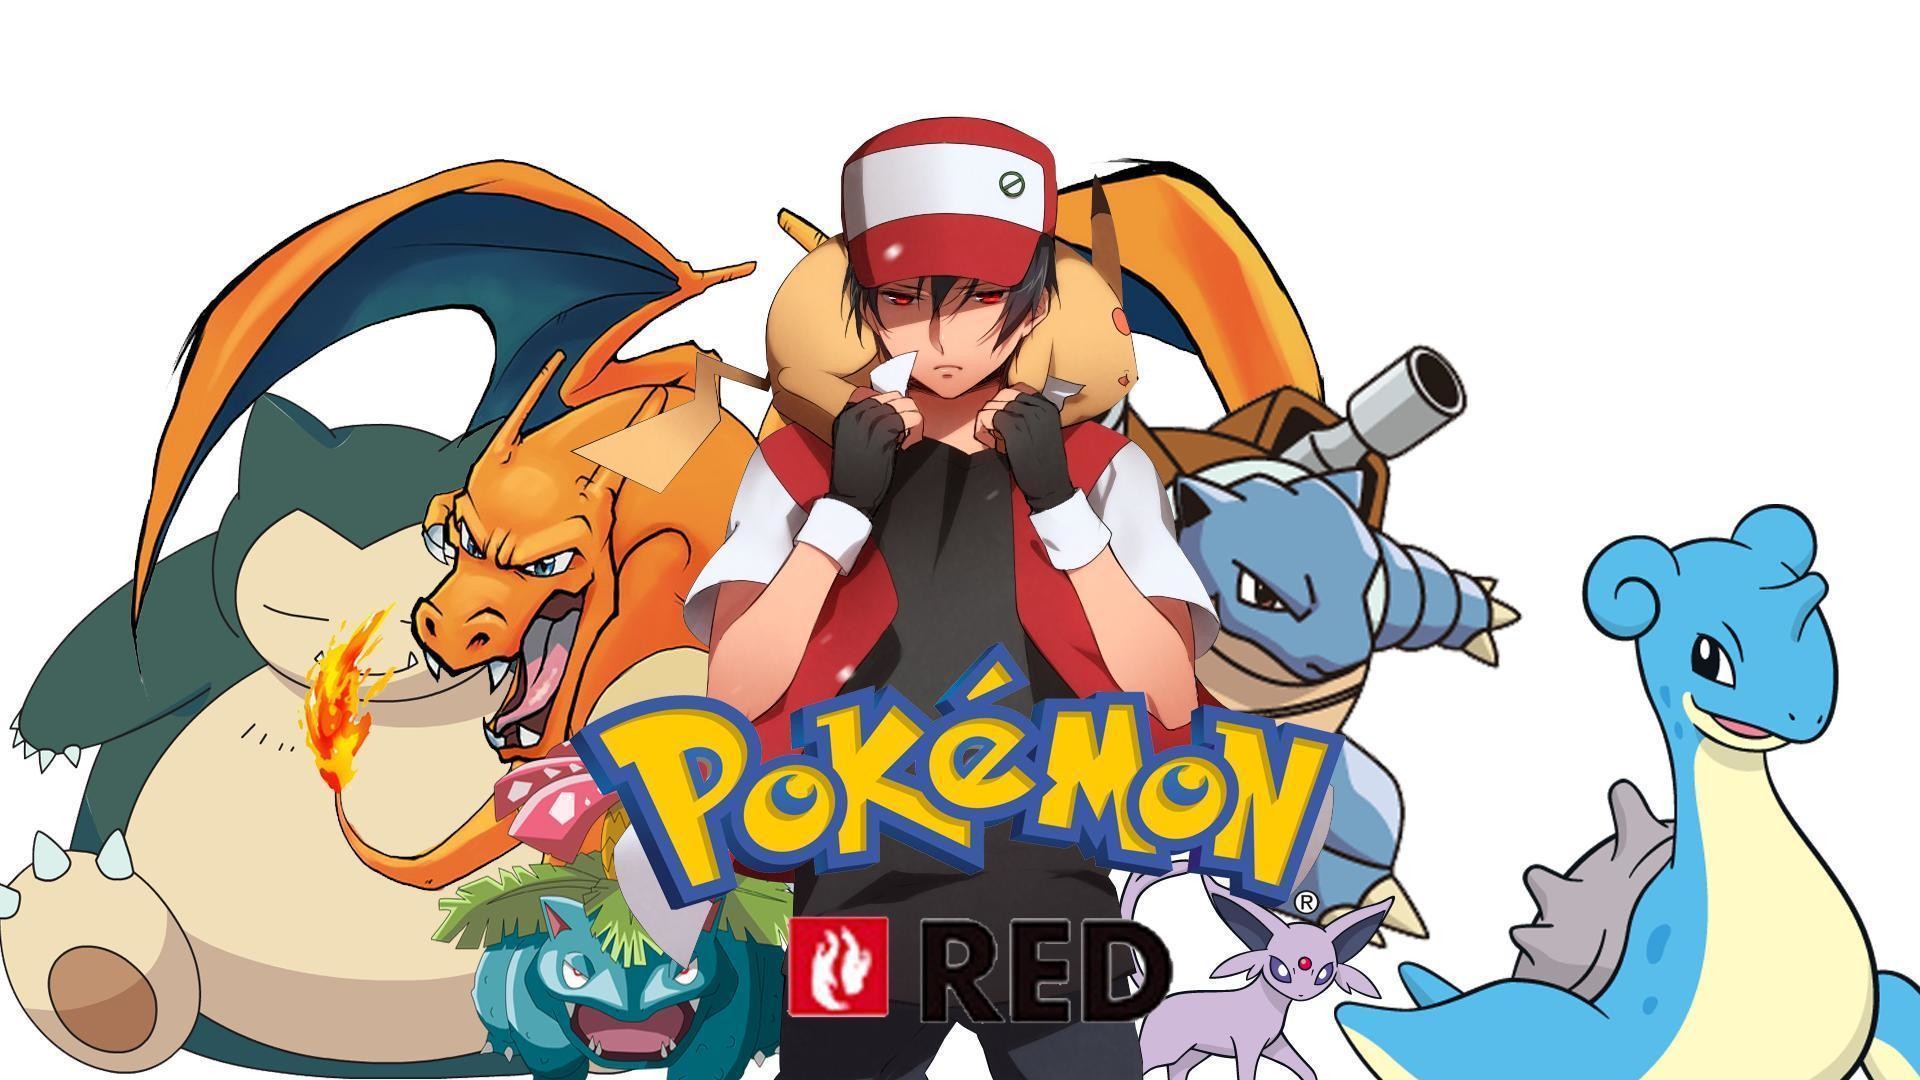 Pokemon Trainer Red With Pokemon Wallpaper - Trainer Wallpaper Pokemon Red , HD Wallpaper & Backgrounds